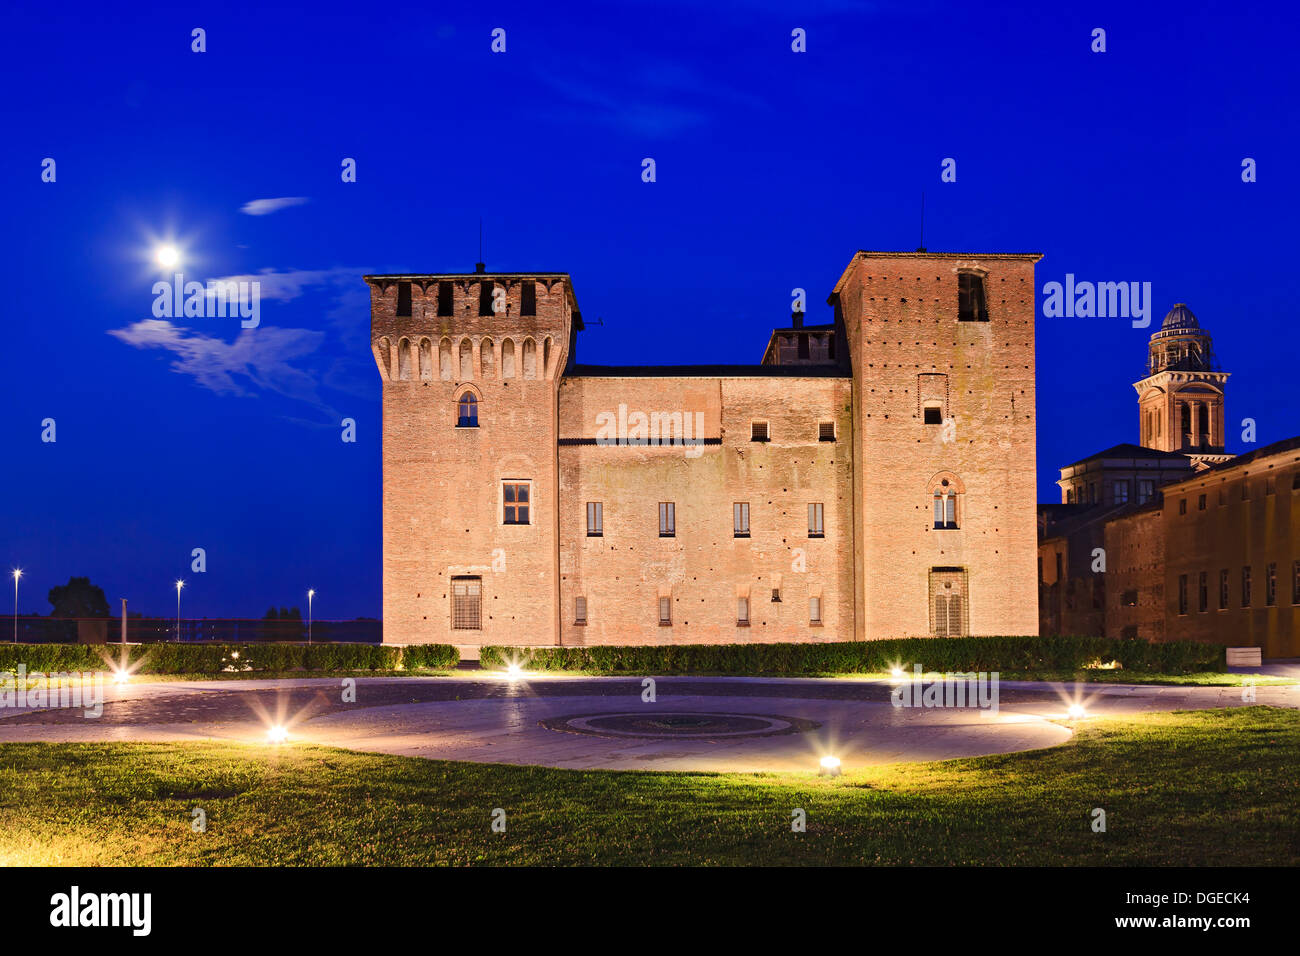 Italy Mantua ancient medieval knight castle tall stone towers walls at sunset full moon light and illumination Stock Photo